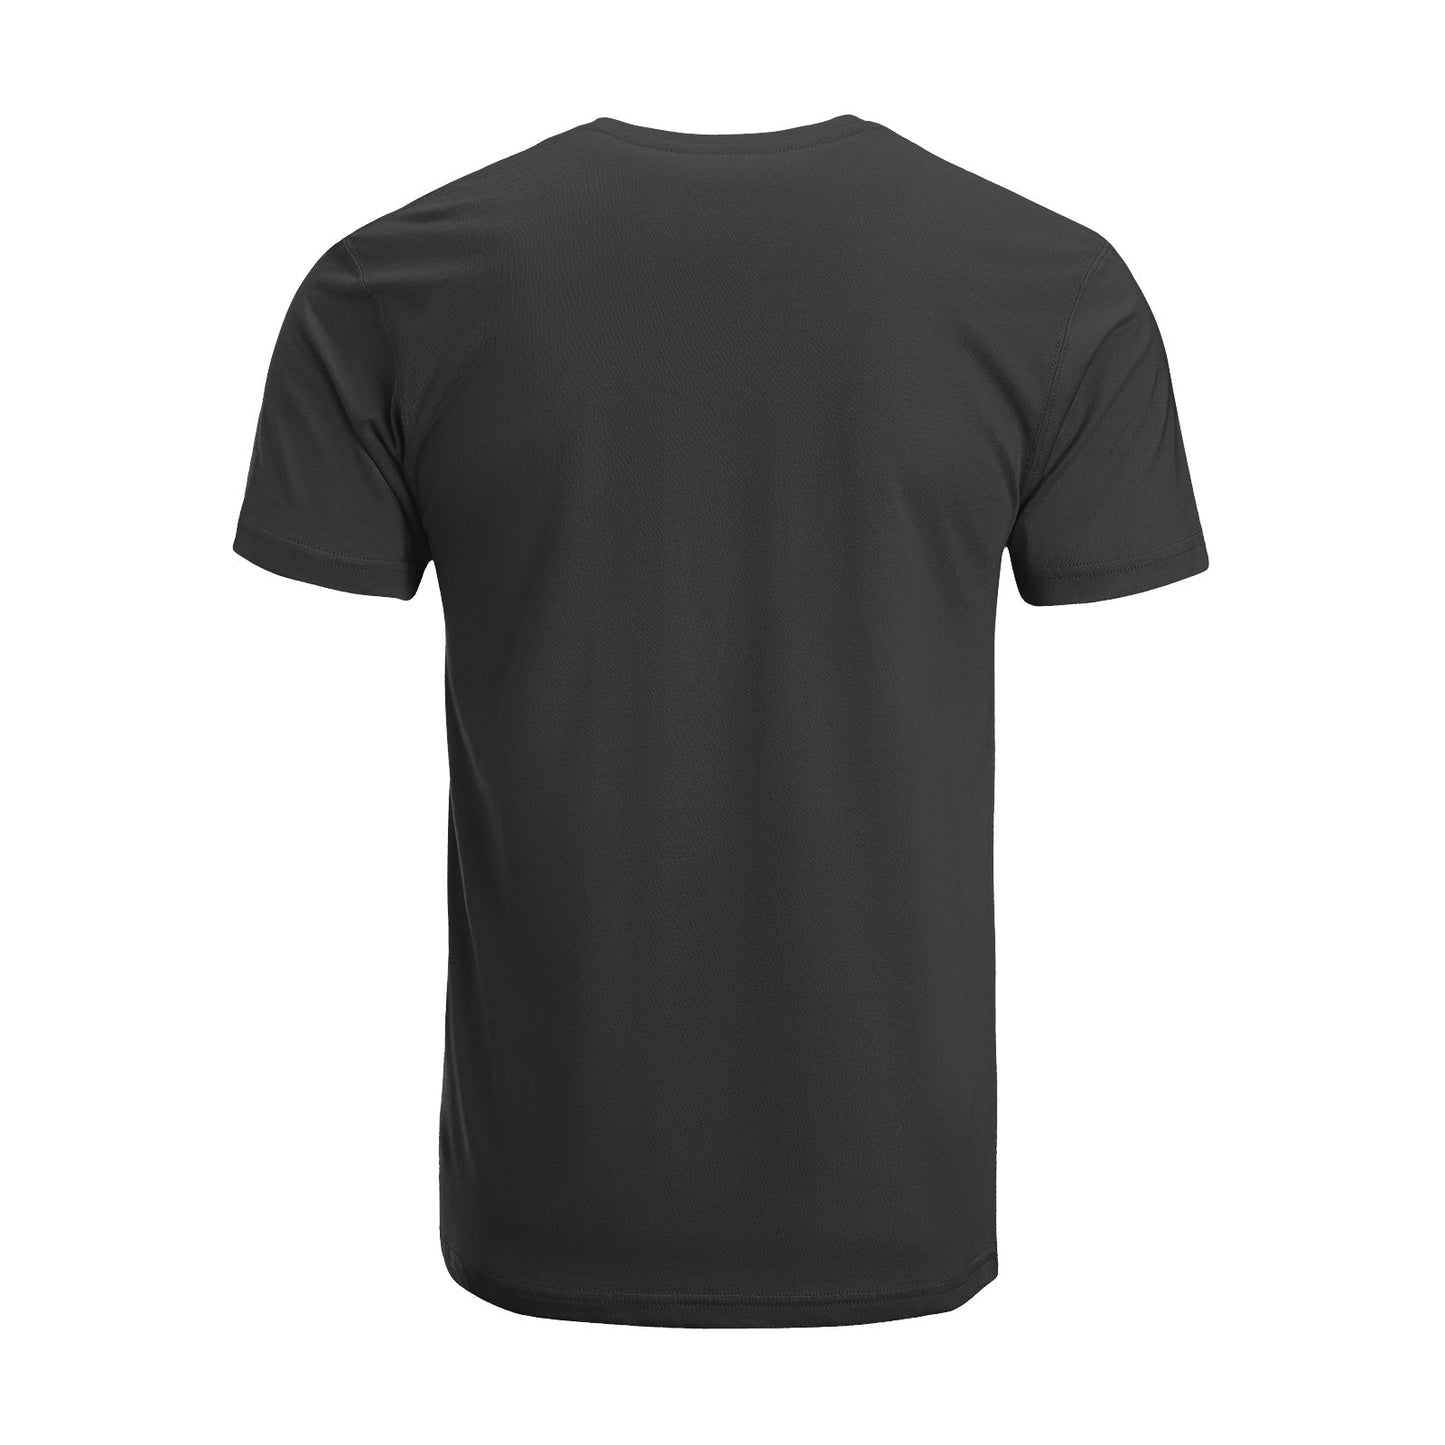 Unisex Short Sleeve Crew Neck Cotton Jersey T-Shirt MOM 17